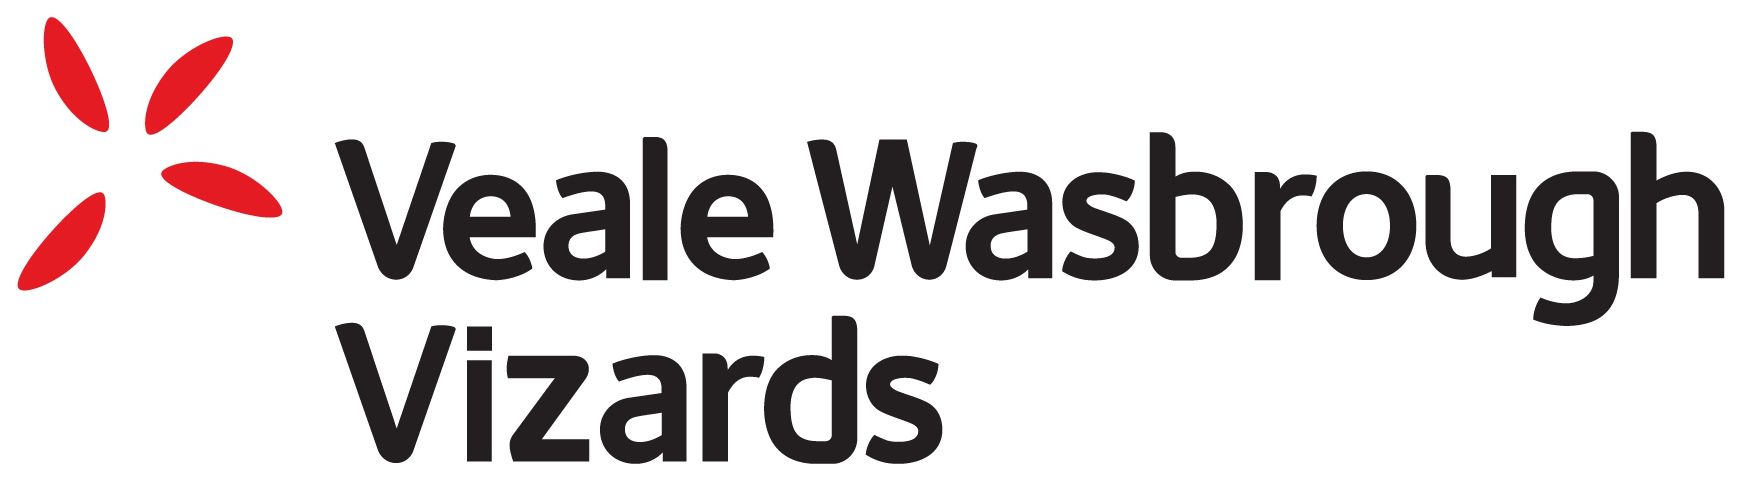 Veale Wasbrough Vizards Logo